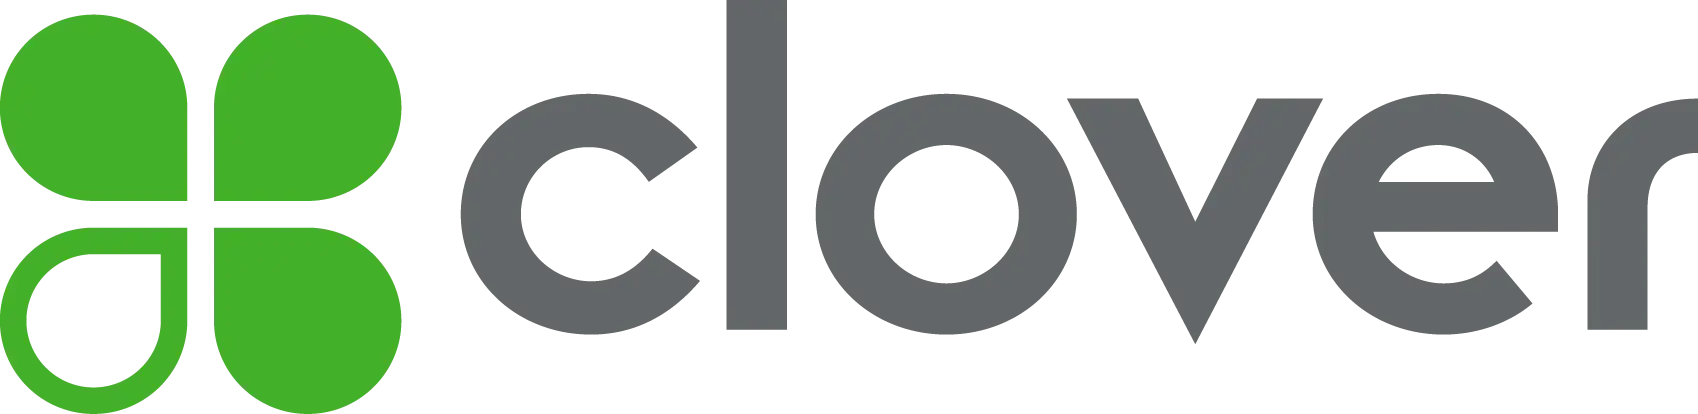 Clover Network, Inc. Logo